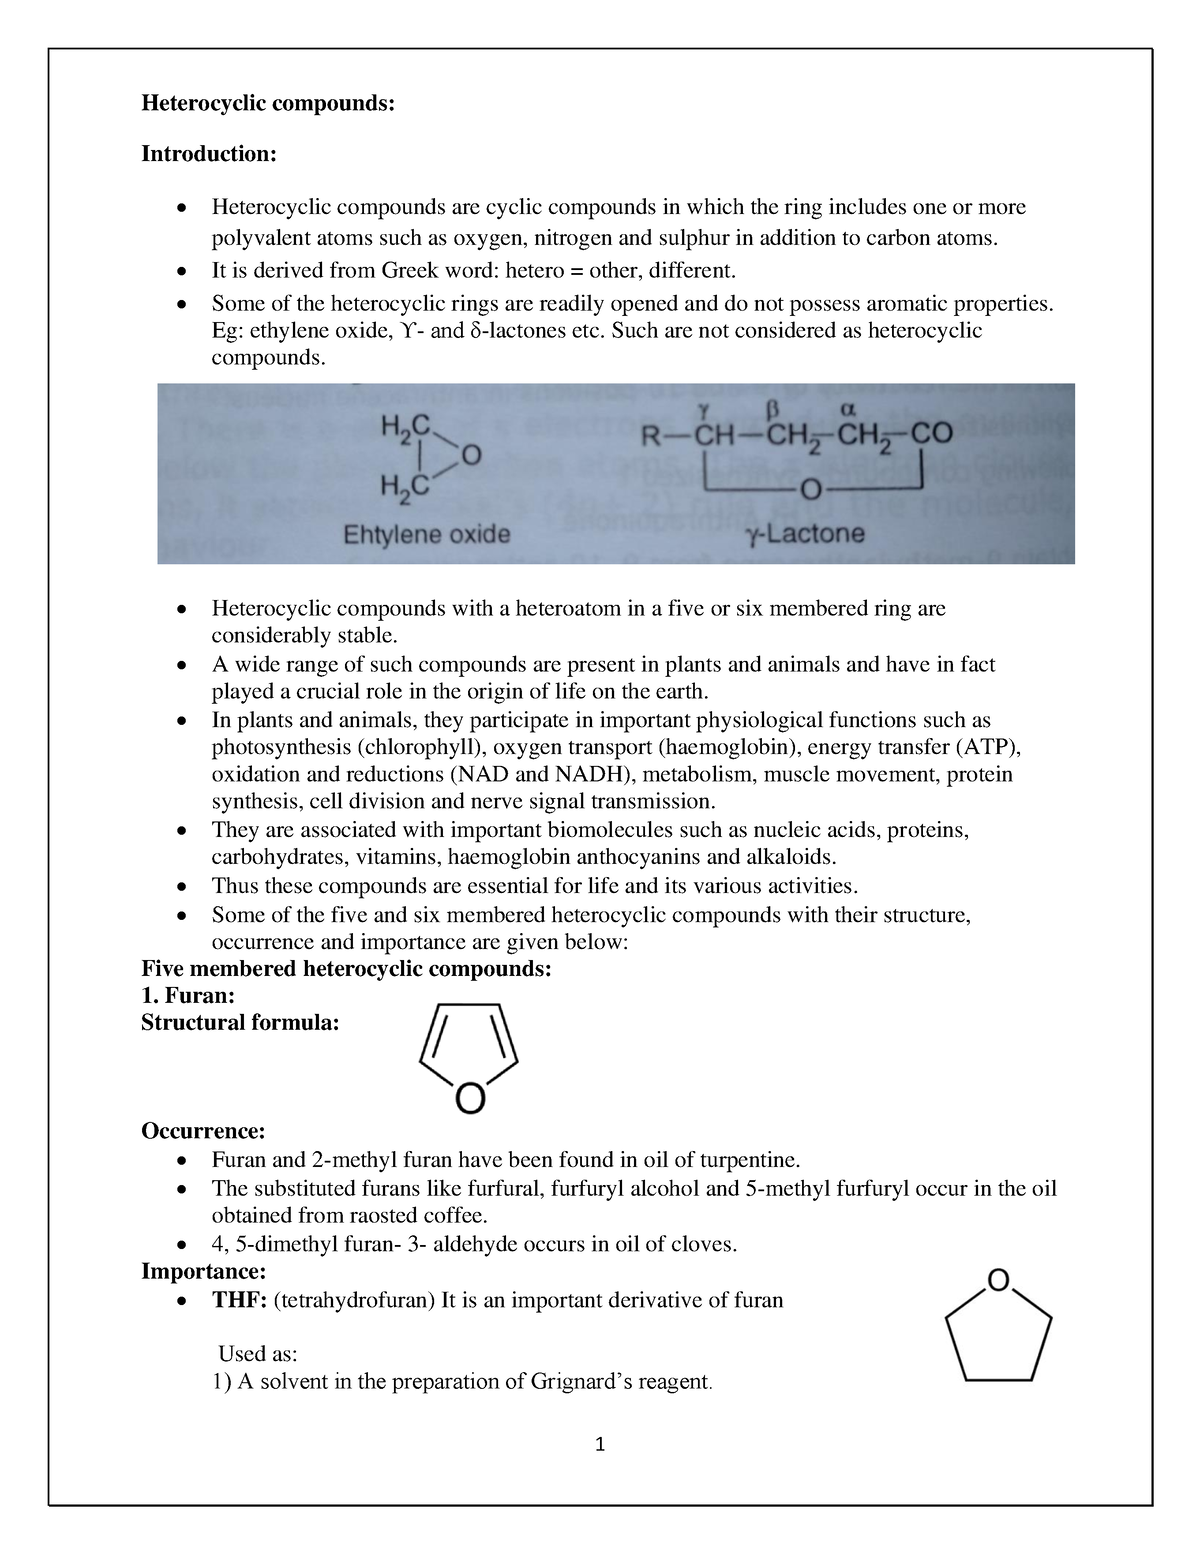 Benziodazole: a new heterocyclic ring system - Chemical Communications  (London) (RSC Publishing)